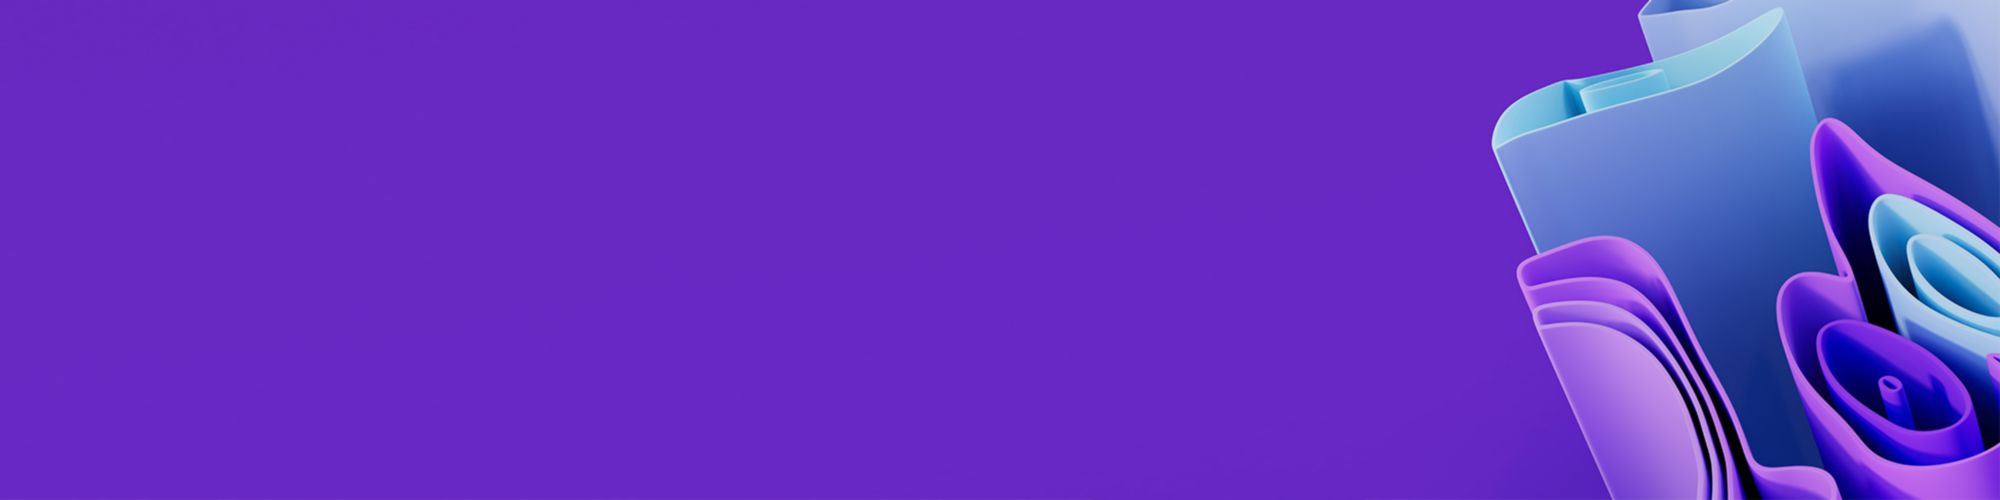 purple-blue-ribbons